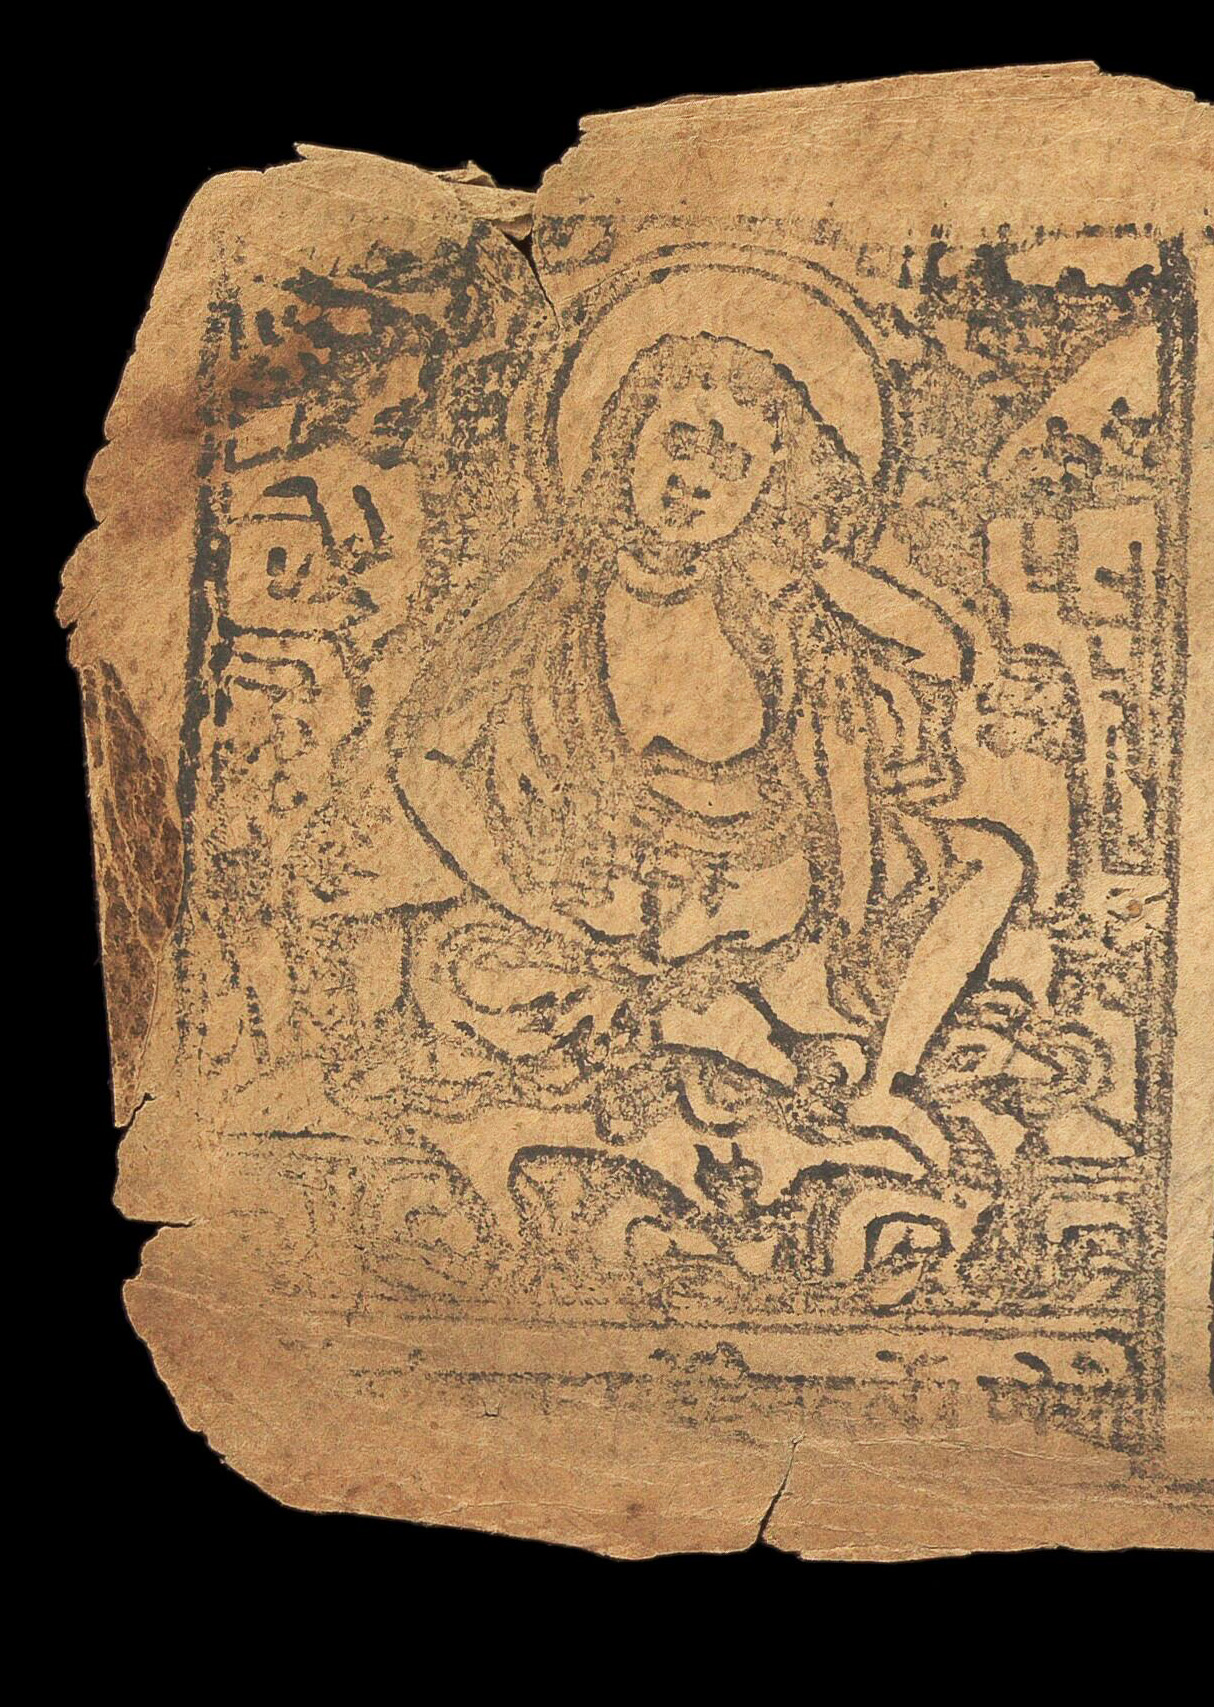 Printed illumination depicting Yogi with right hand raised to head sitting cross-legged before landscape